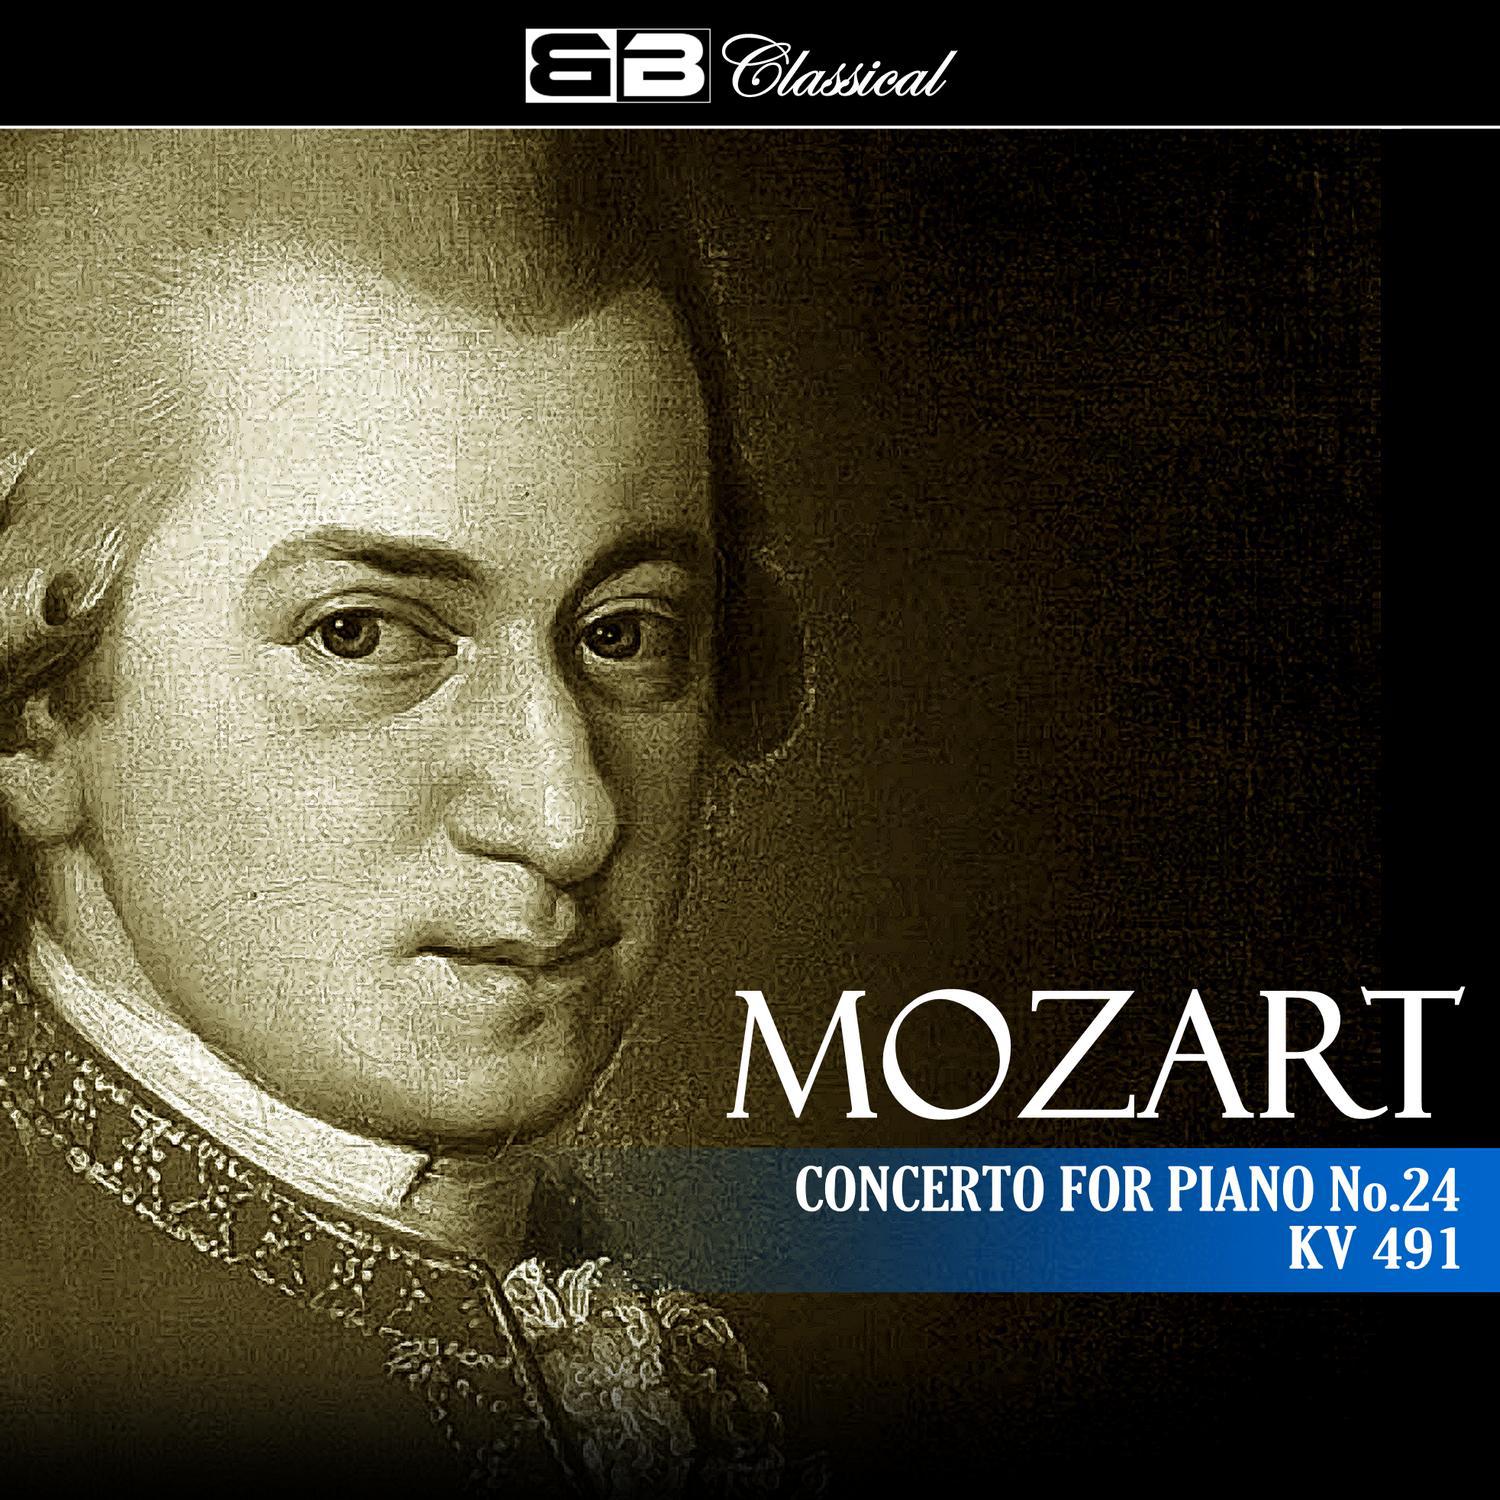 Mozart Concerto for Piano No. 24 KV 491 (Single)